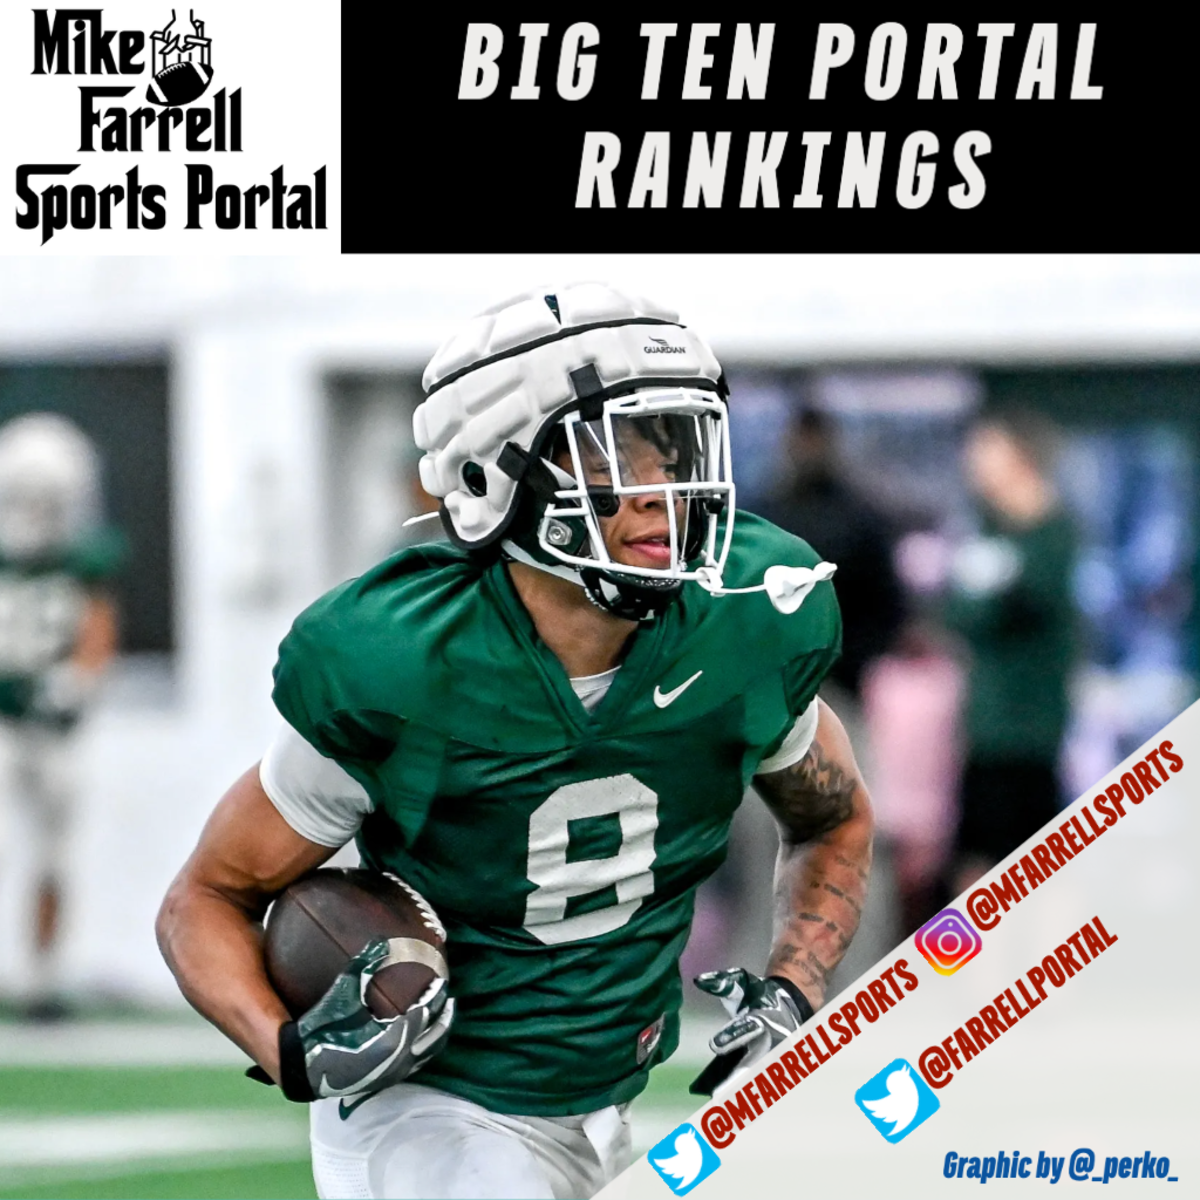 Big Ten Portal Rankings